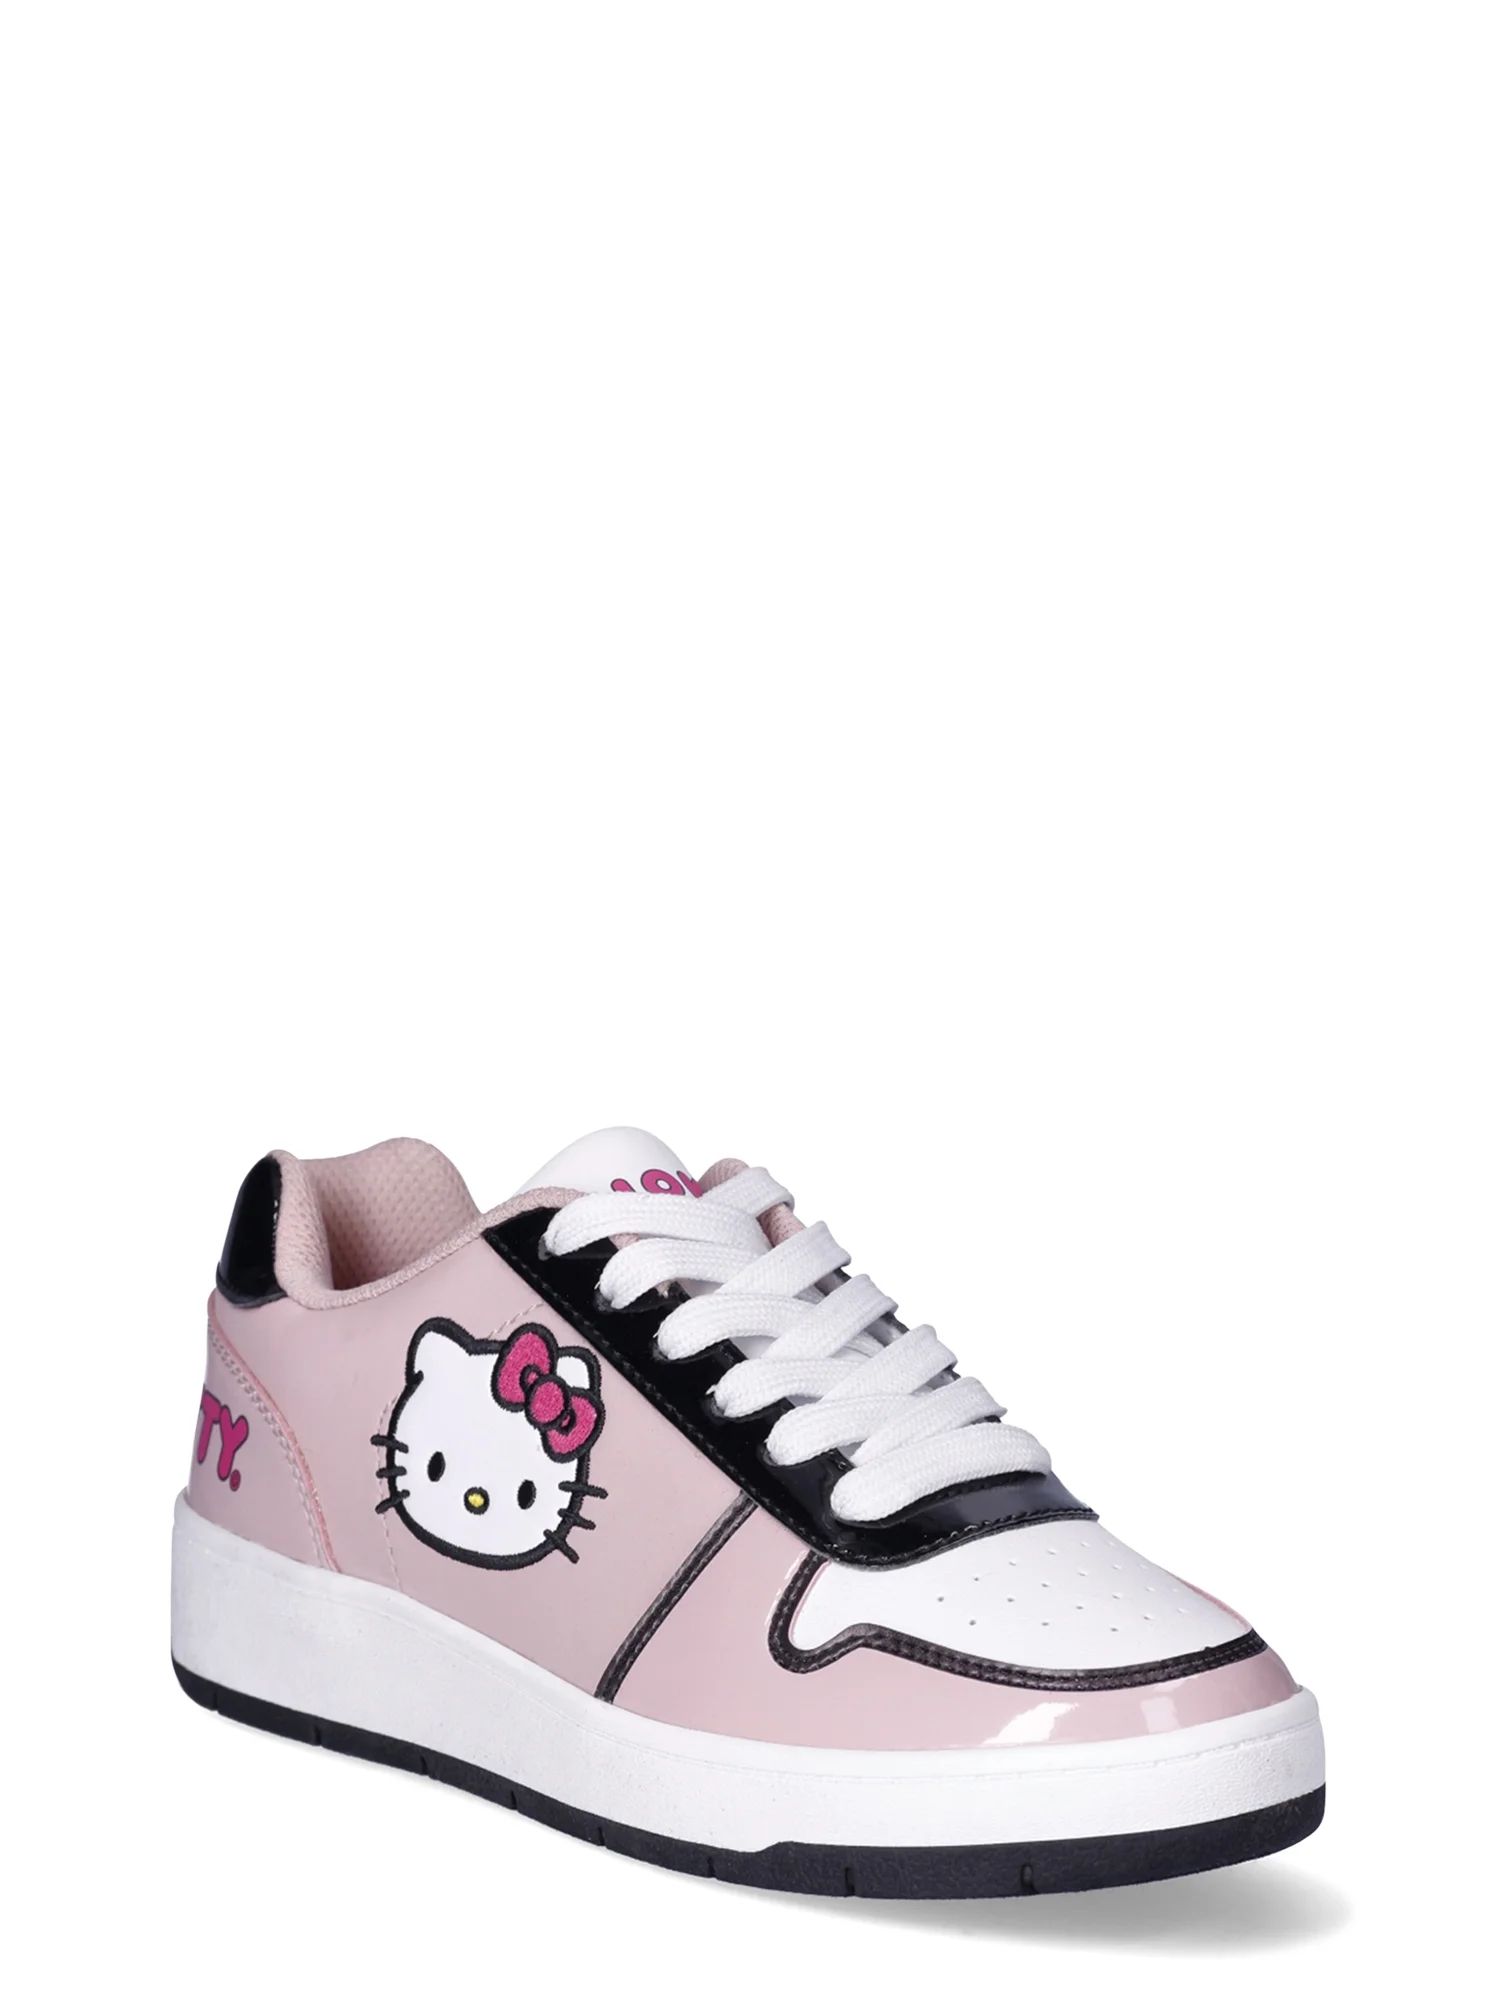 Hello Kitty by Sanrio Women's Pink Casual Court Sneakers, Sizes 6-11, Regular Width | Walmart (US)